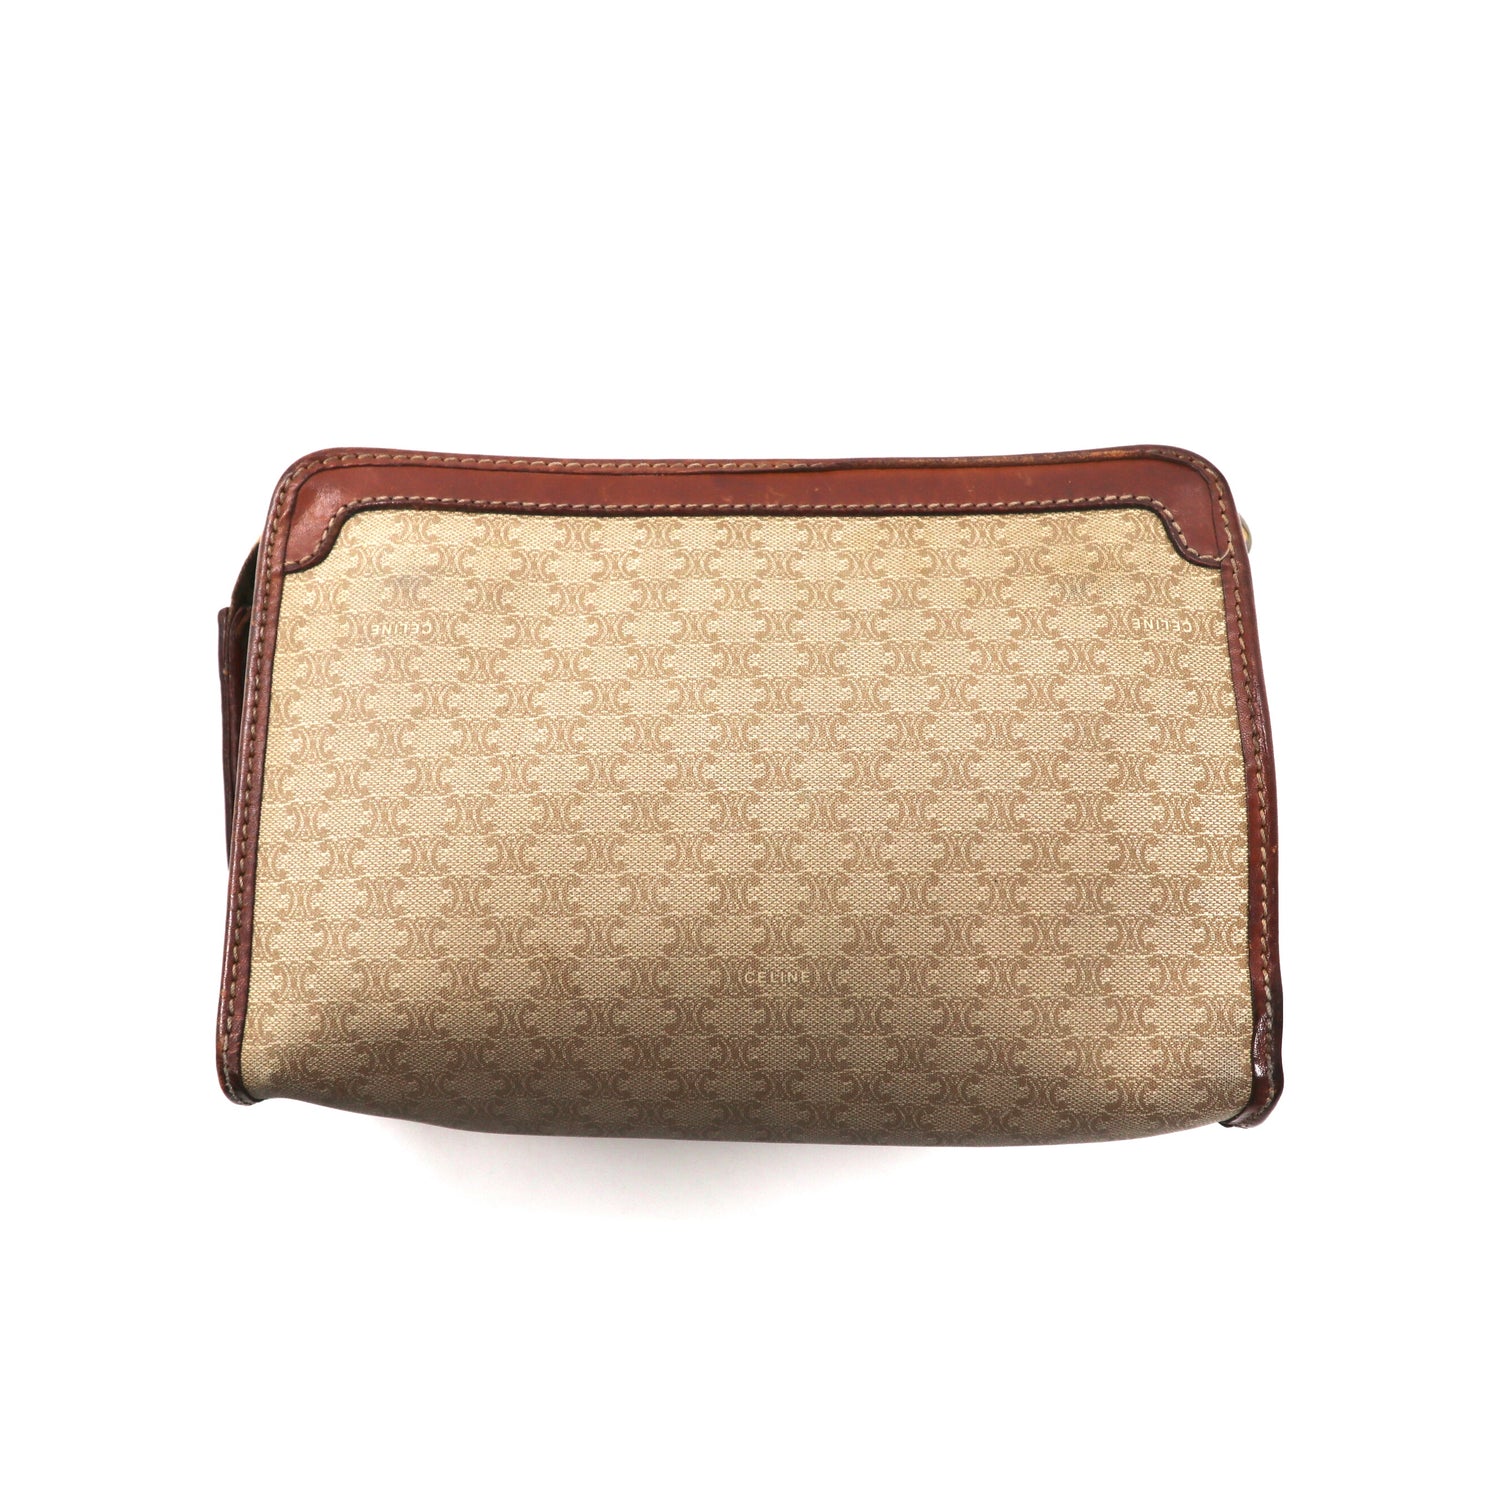 CELINE Clutch Bag Beige Leather Macadam Pattern M06 Made in